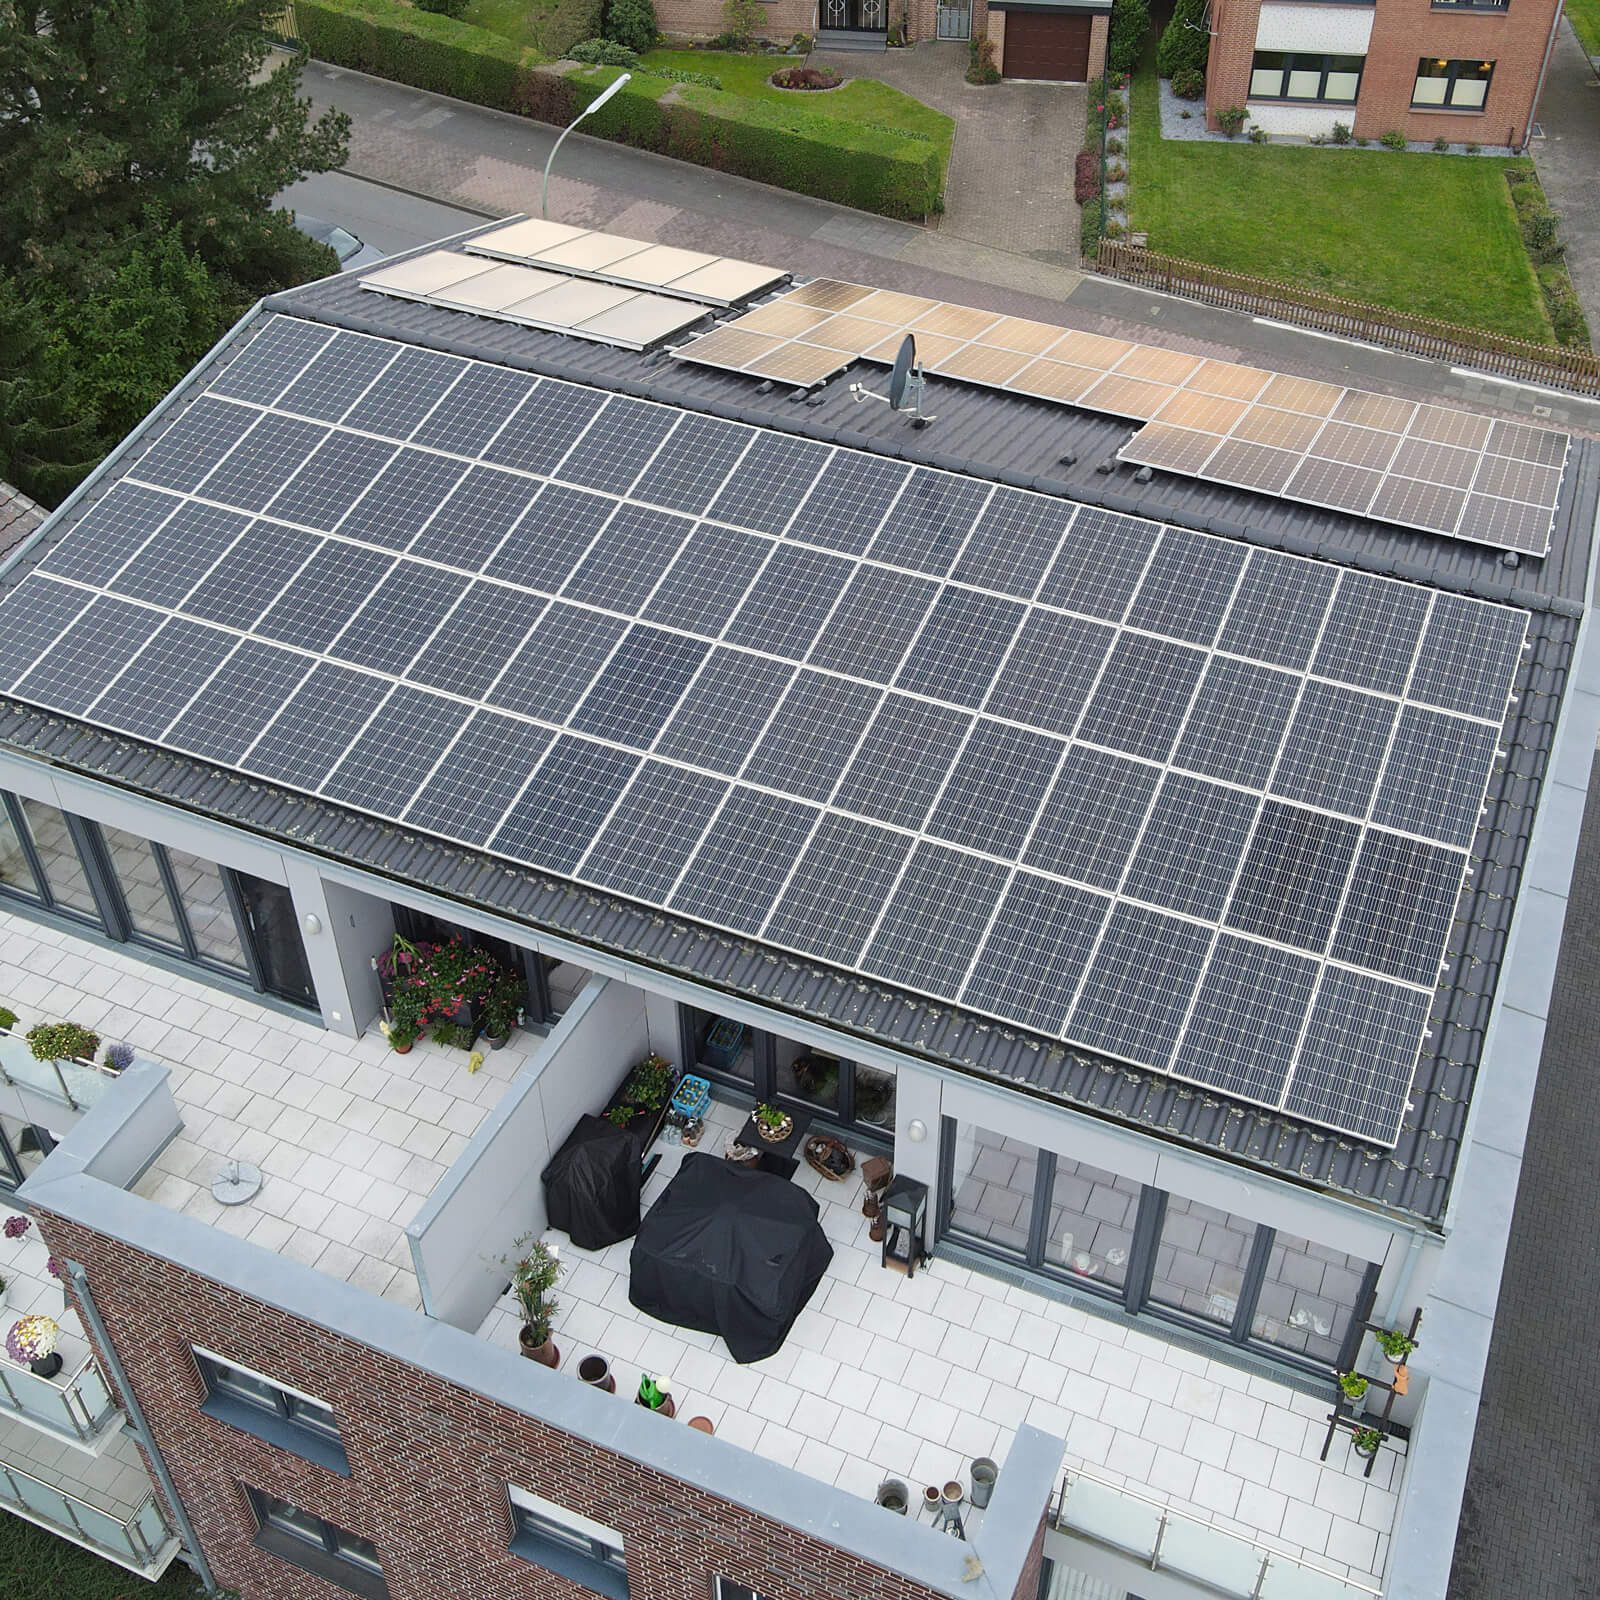 7yrds-photovoltaic-mehrfamilienhaus-goch-01